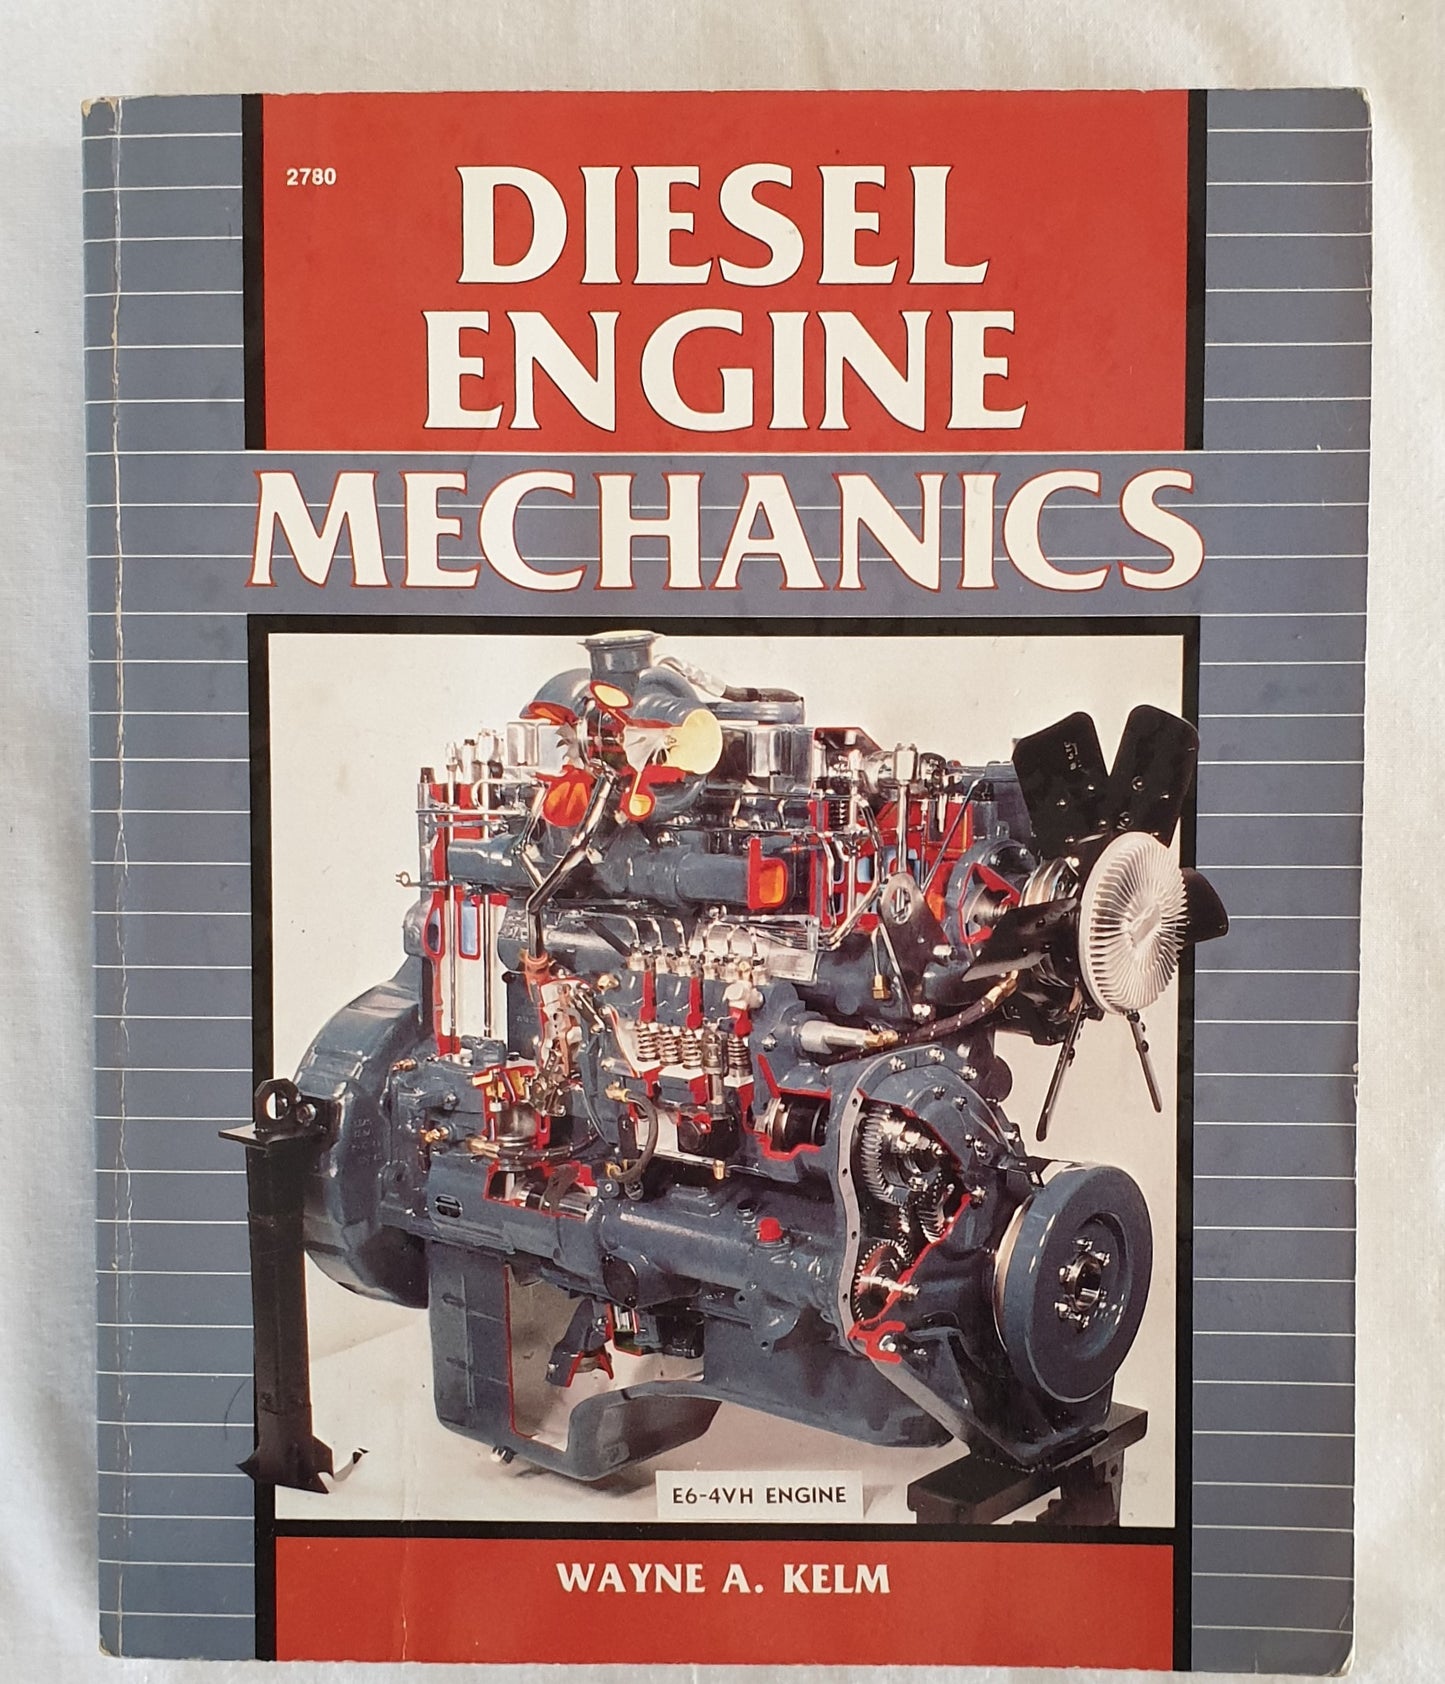 Diesel Engine Mechanics by Wayne A. Kelm